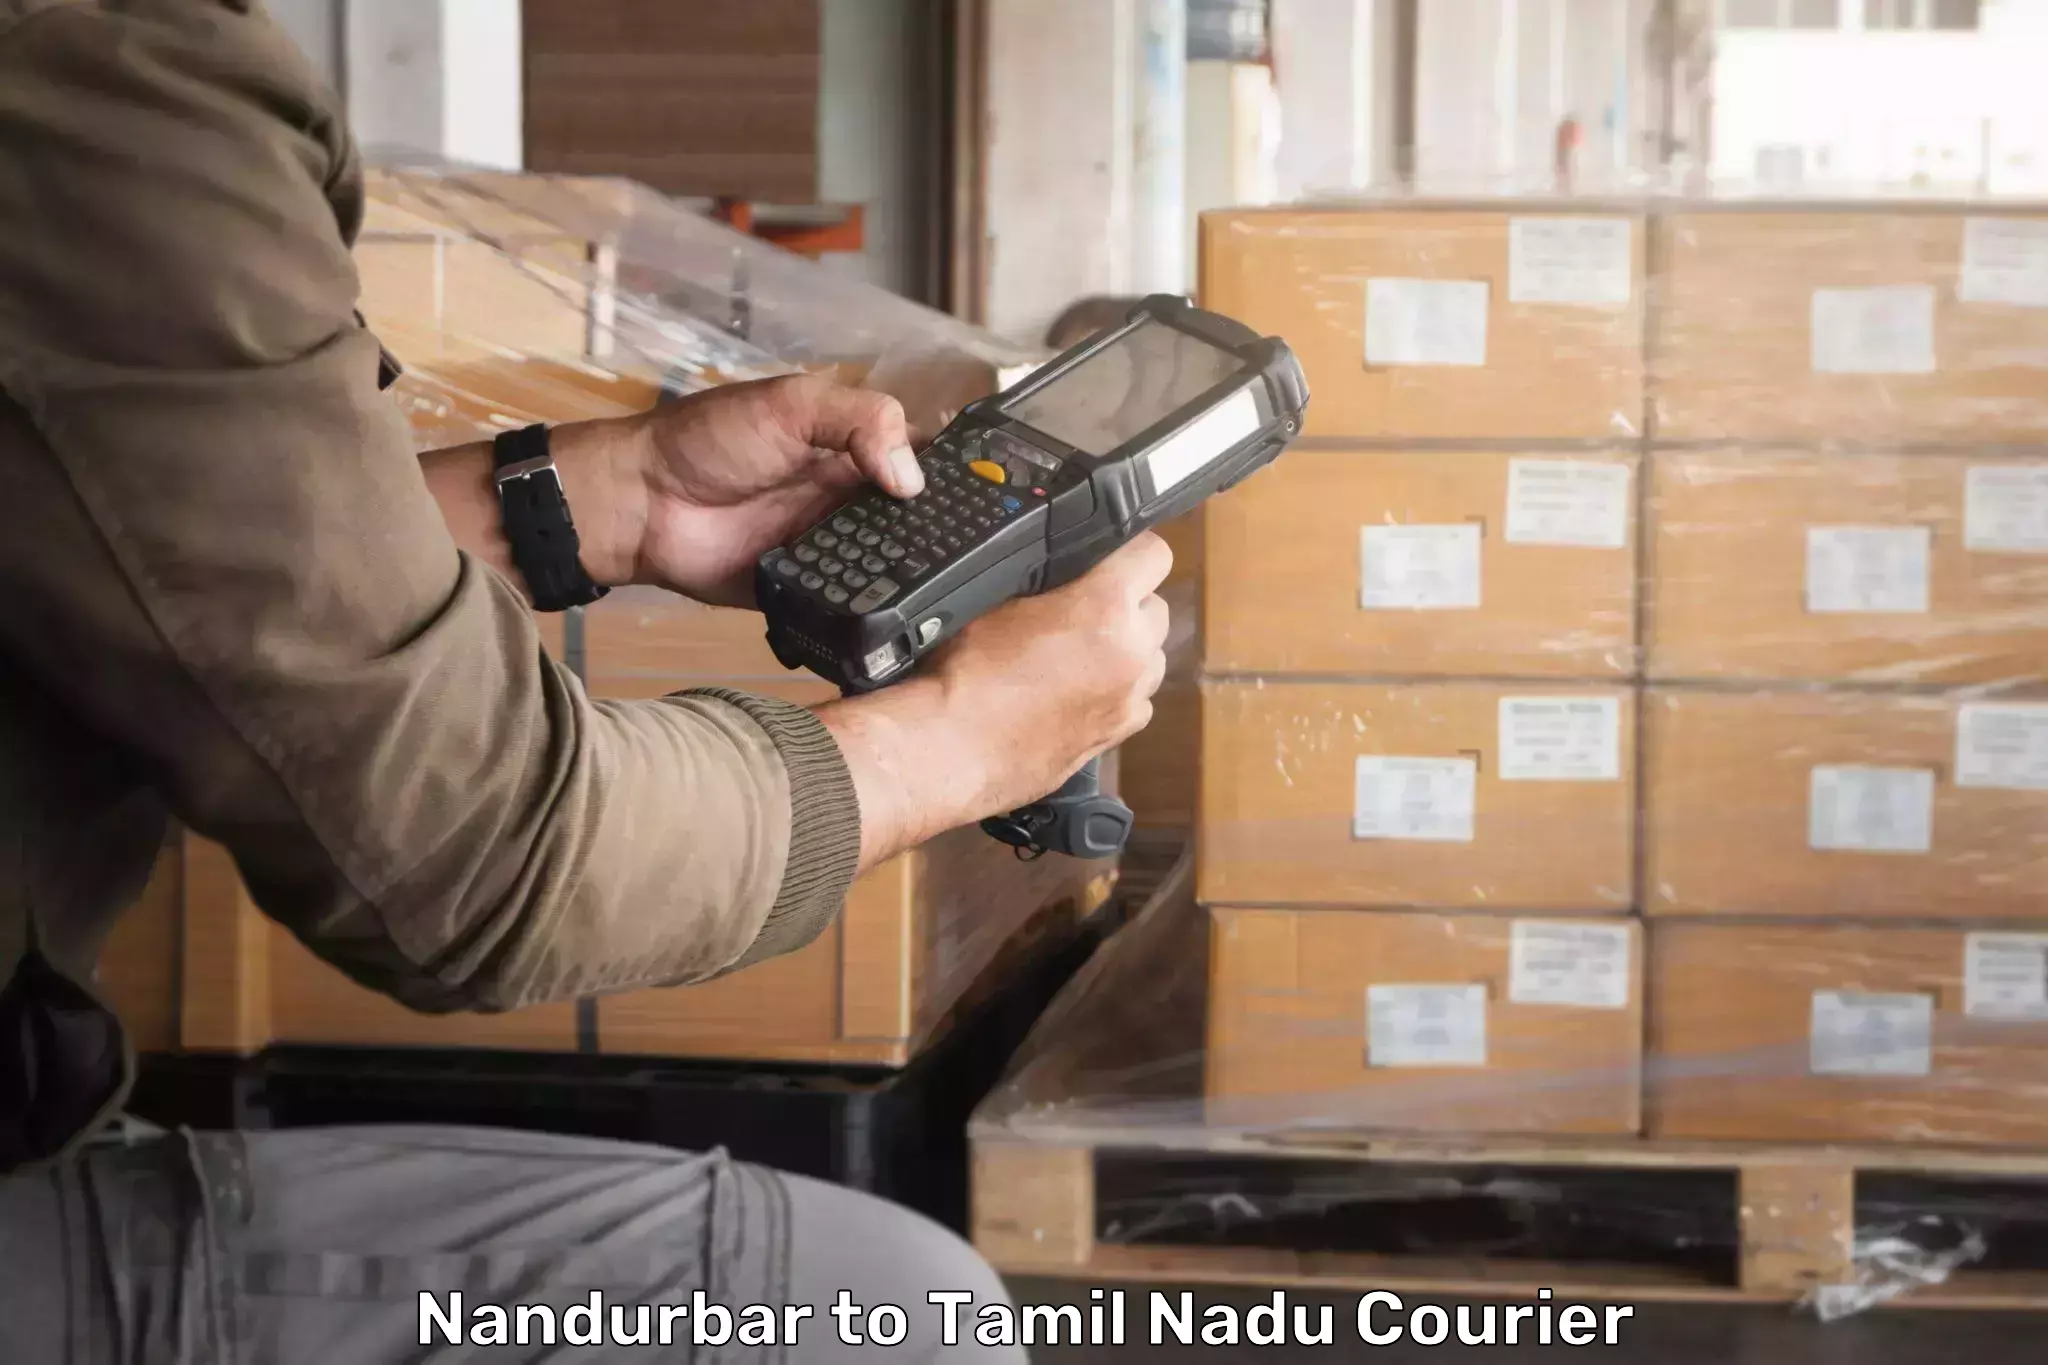 Speedy delivery service Nandurbar to Oddanchatram